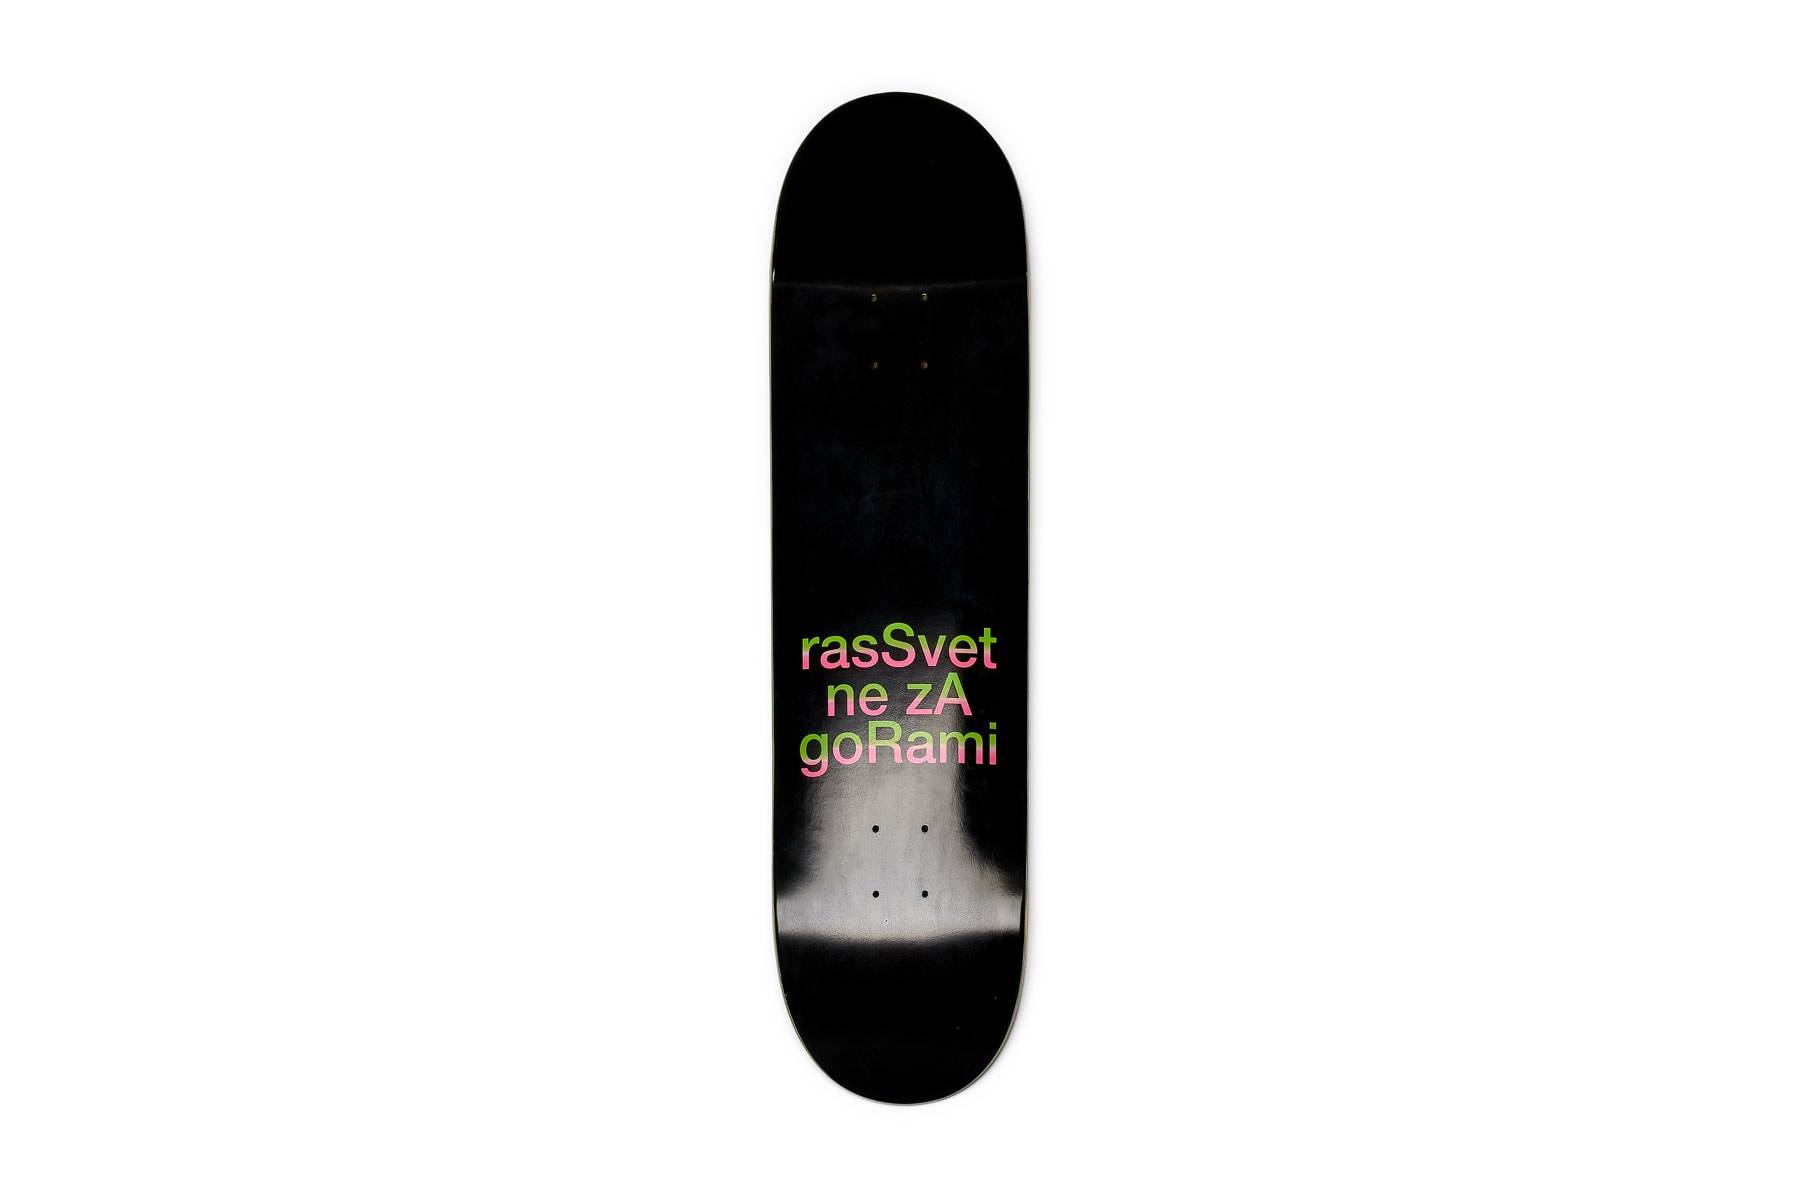 gosha rubchinskiy paccbet rassvet fall winter 2018 july 28 drop black skateboard deck graphic print